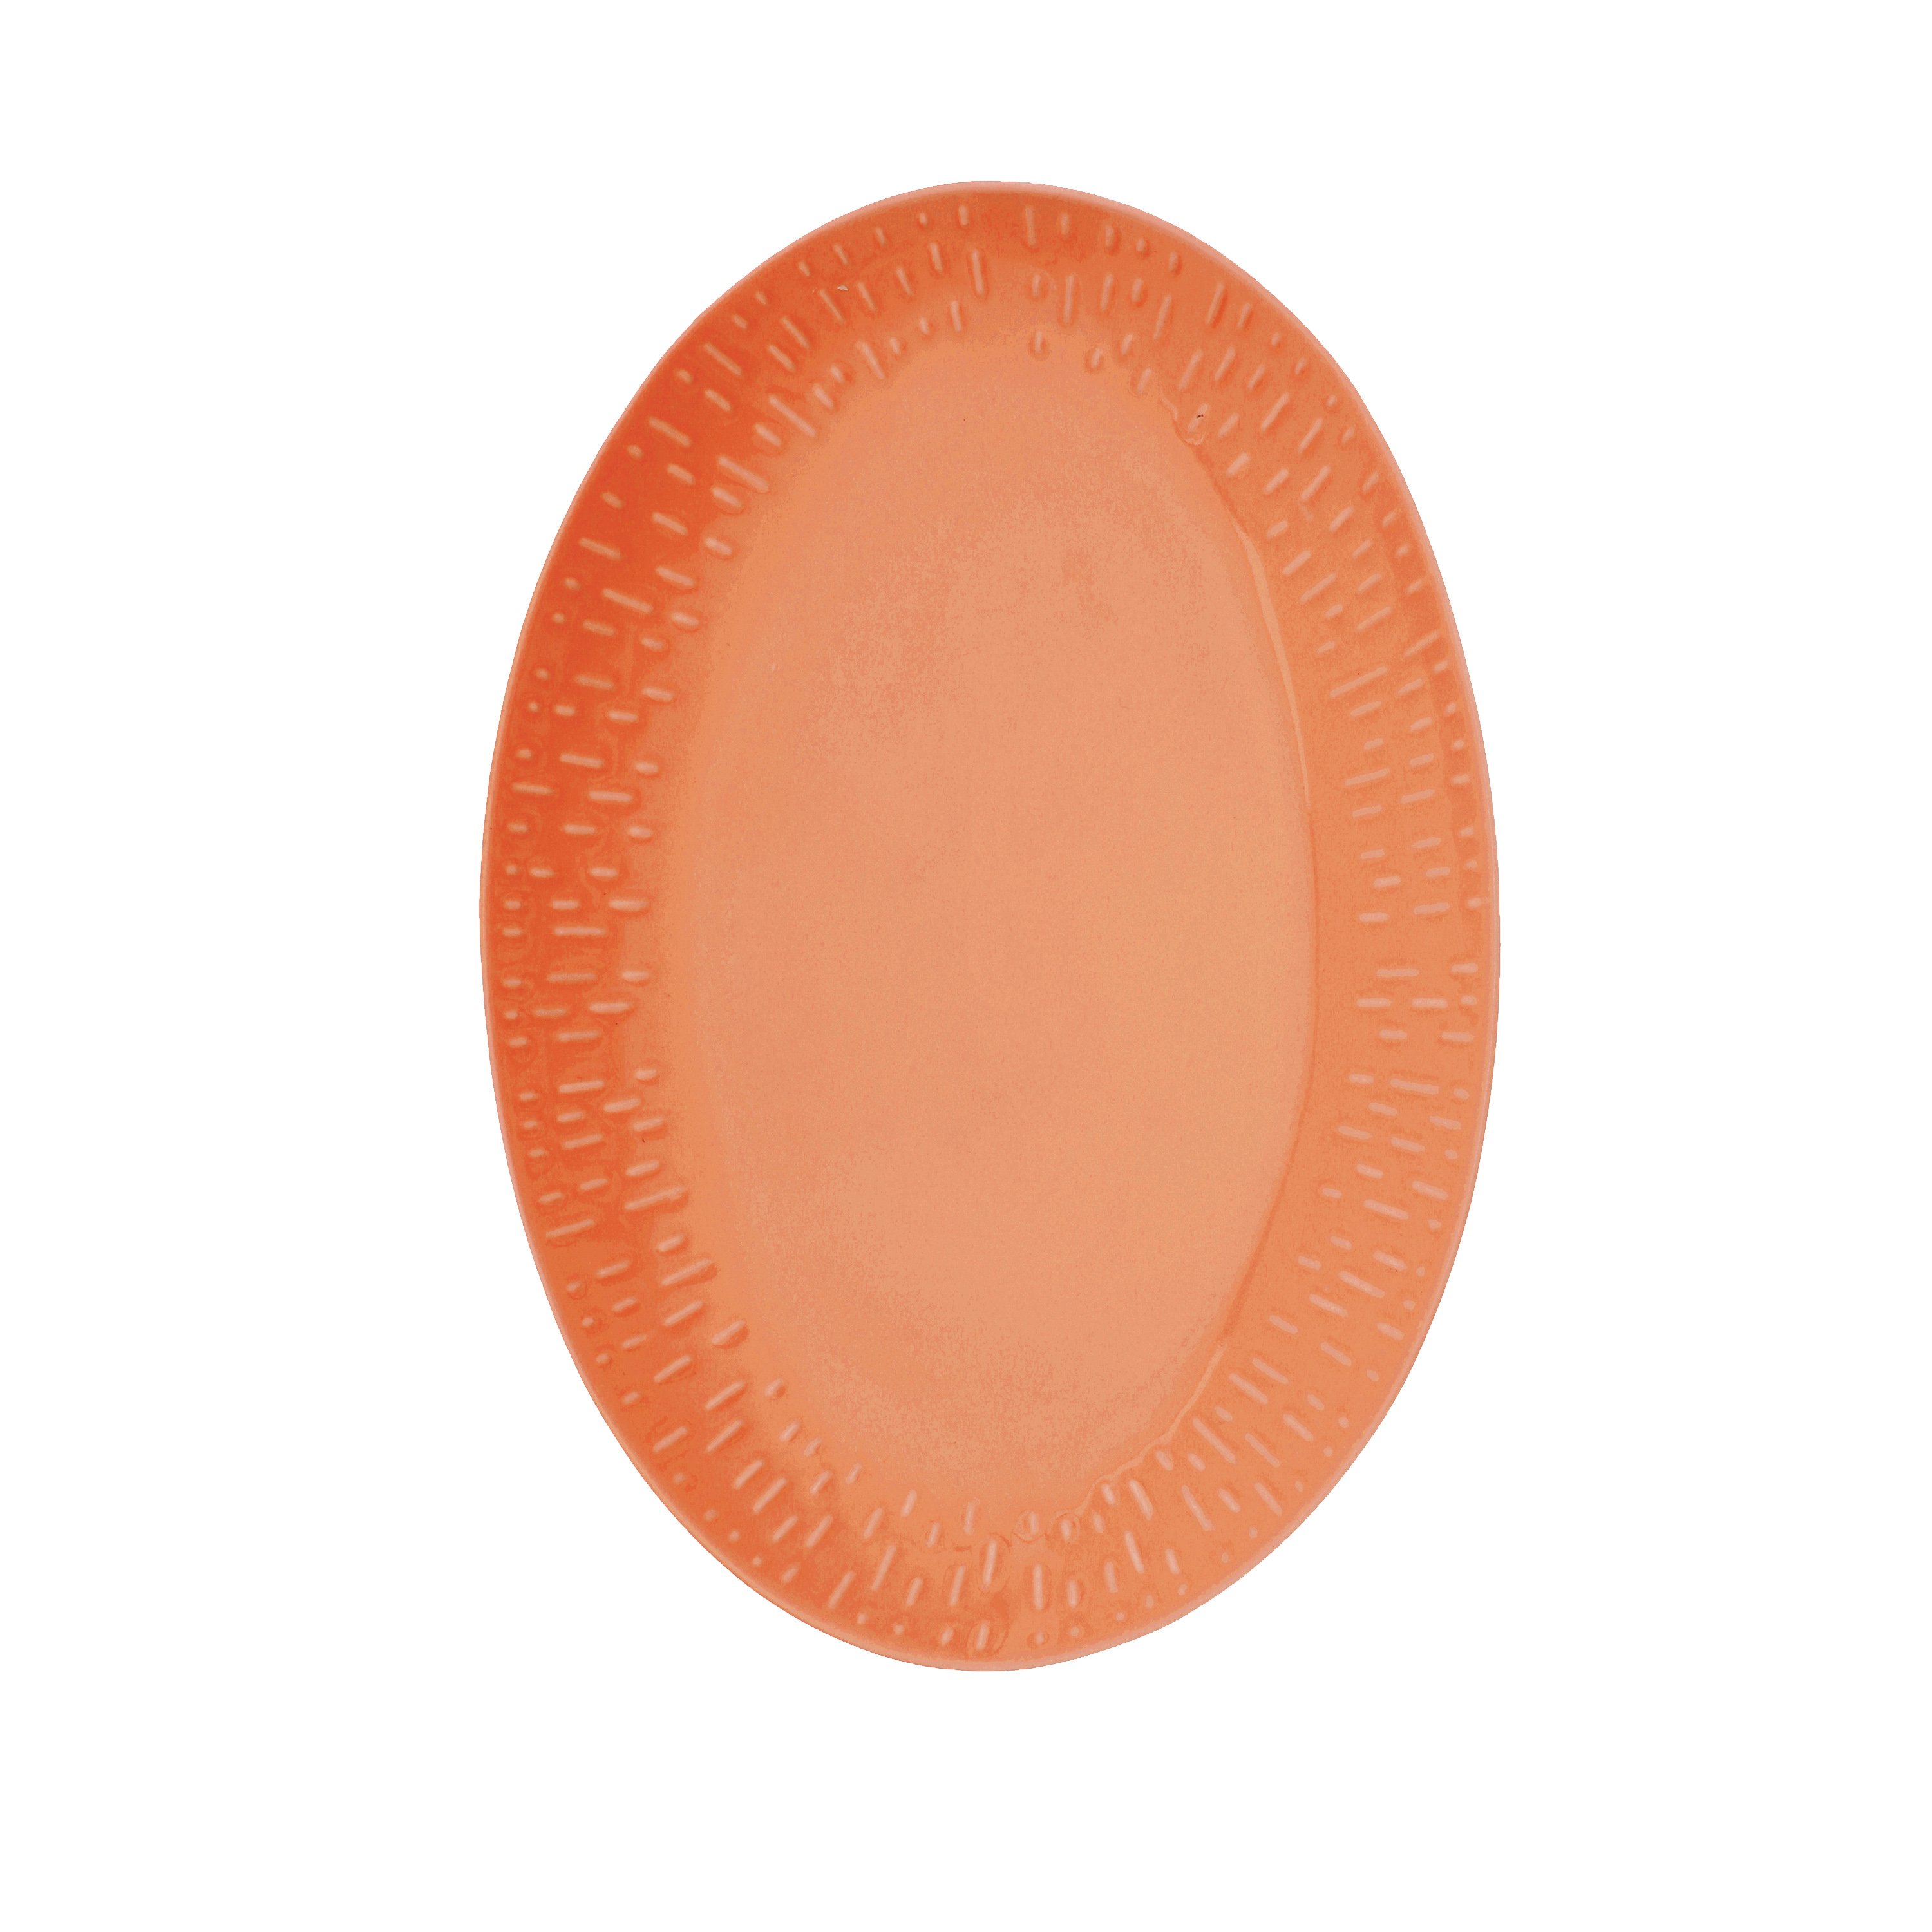 Aida - Life in Colour - Confetti - Apricot oval dish w/relief porcelain (13334) - Hjemme og kjøkken